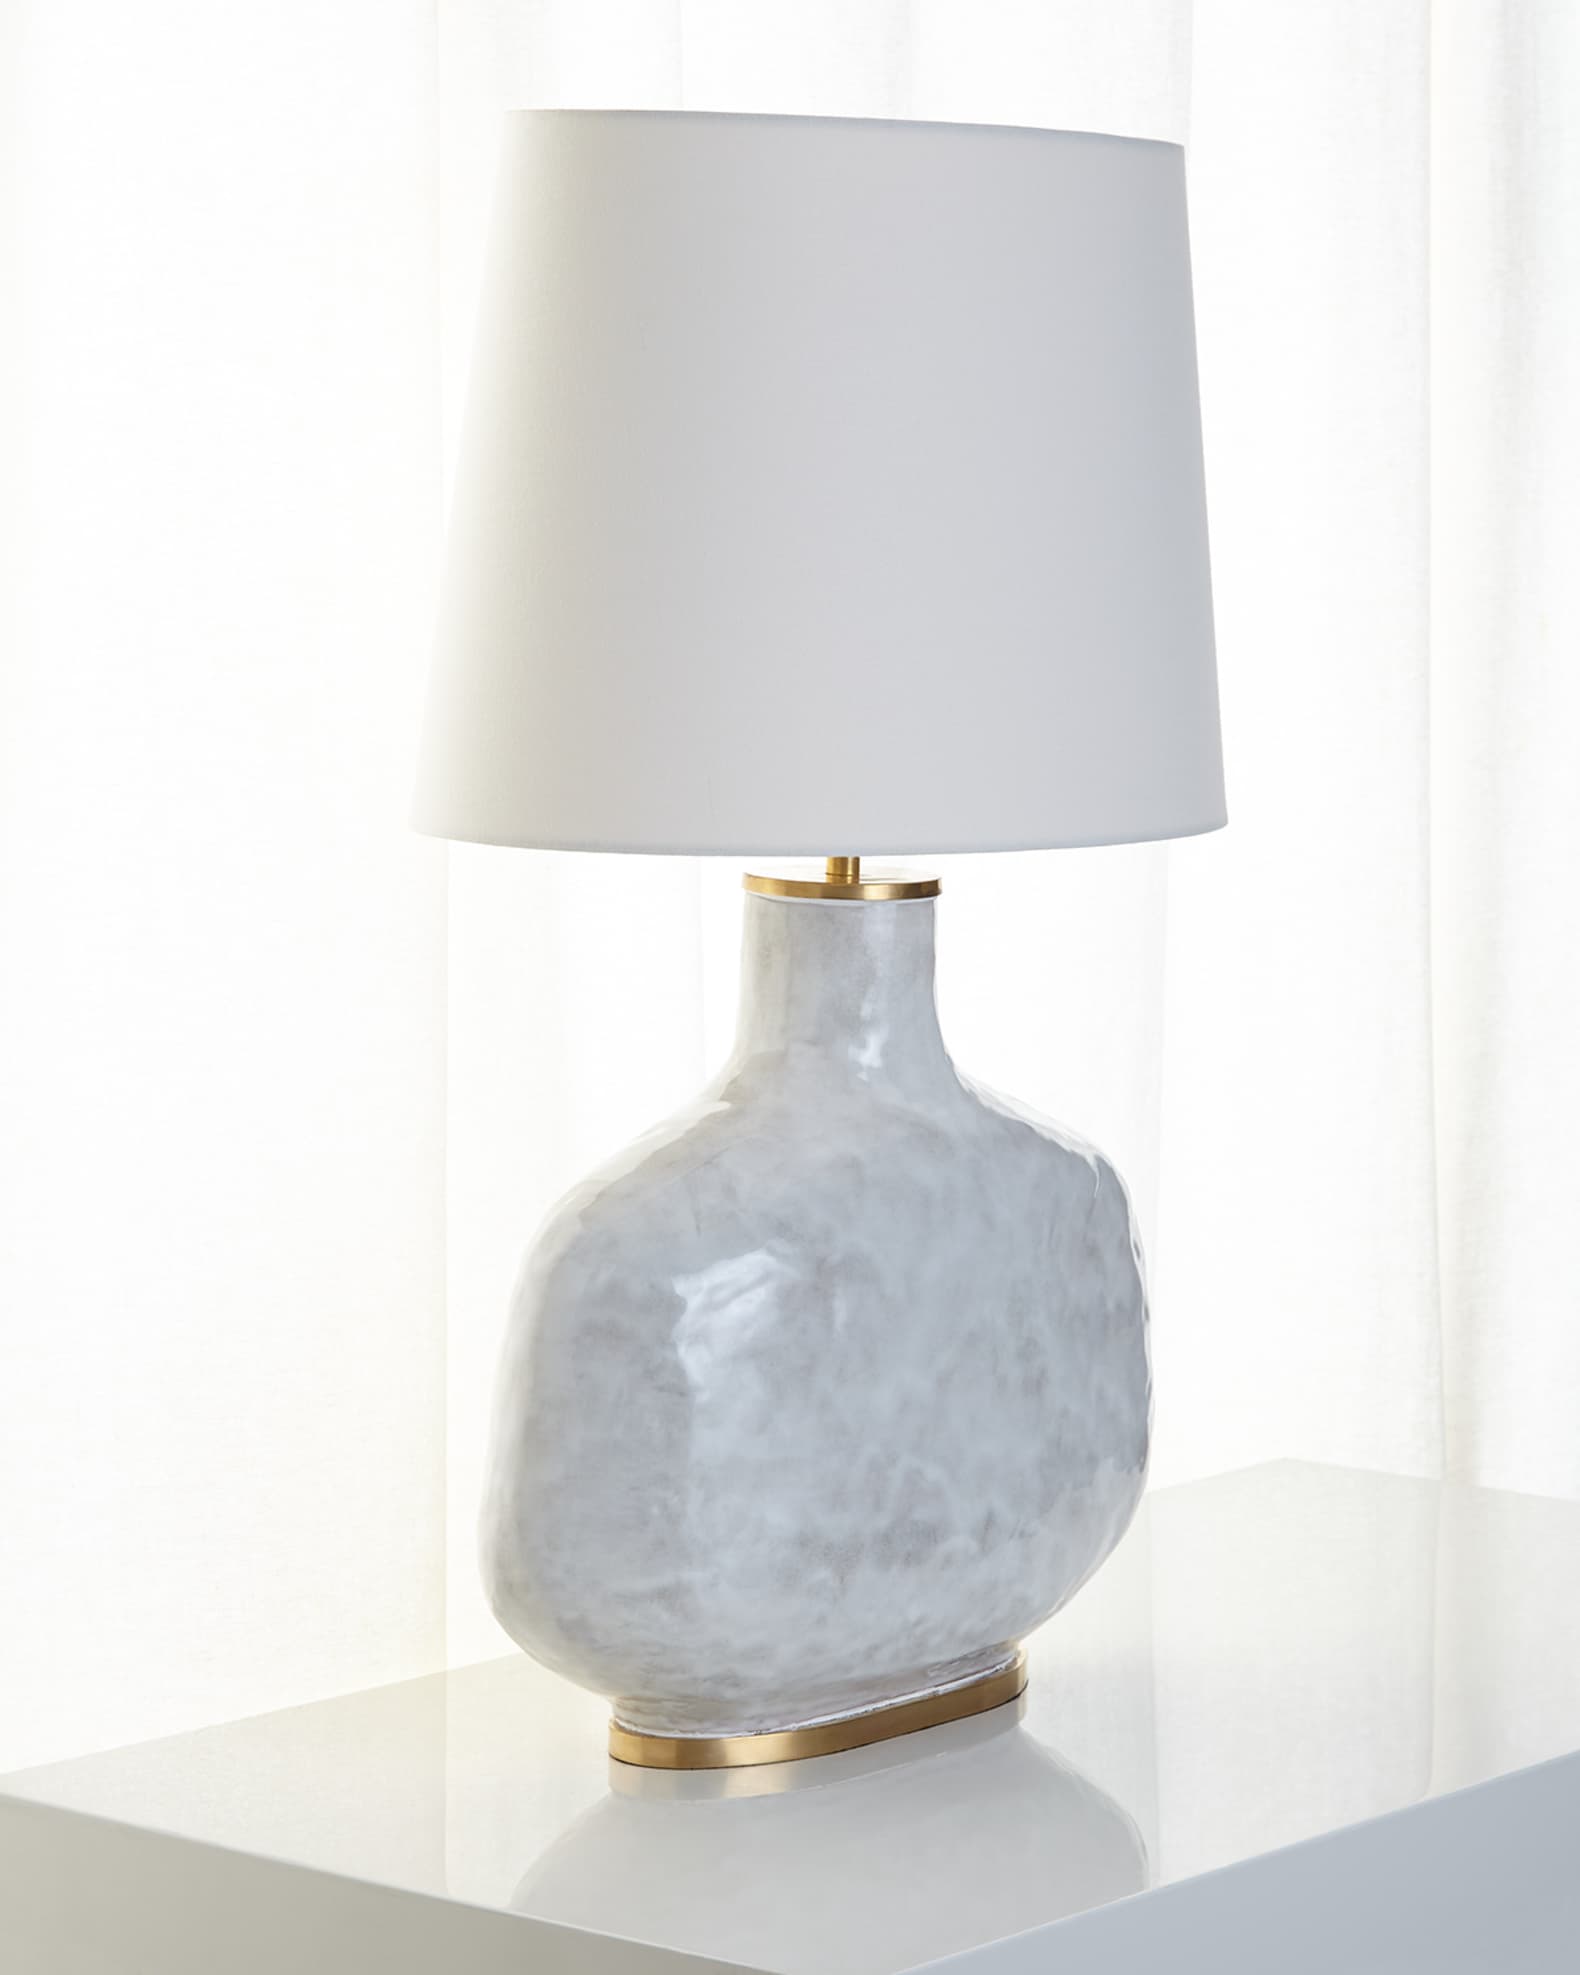 dam Motivatie stel je voor Kelly Wearstler for Visual Comfort Signature Beton Large Table Lamp |  Neiman Marcus